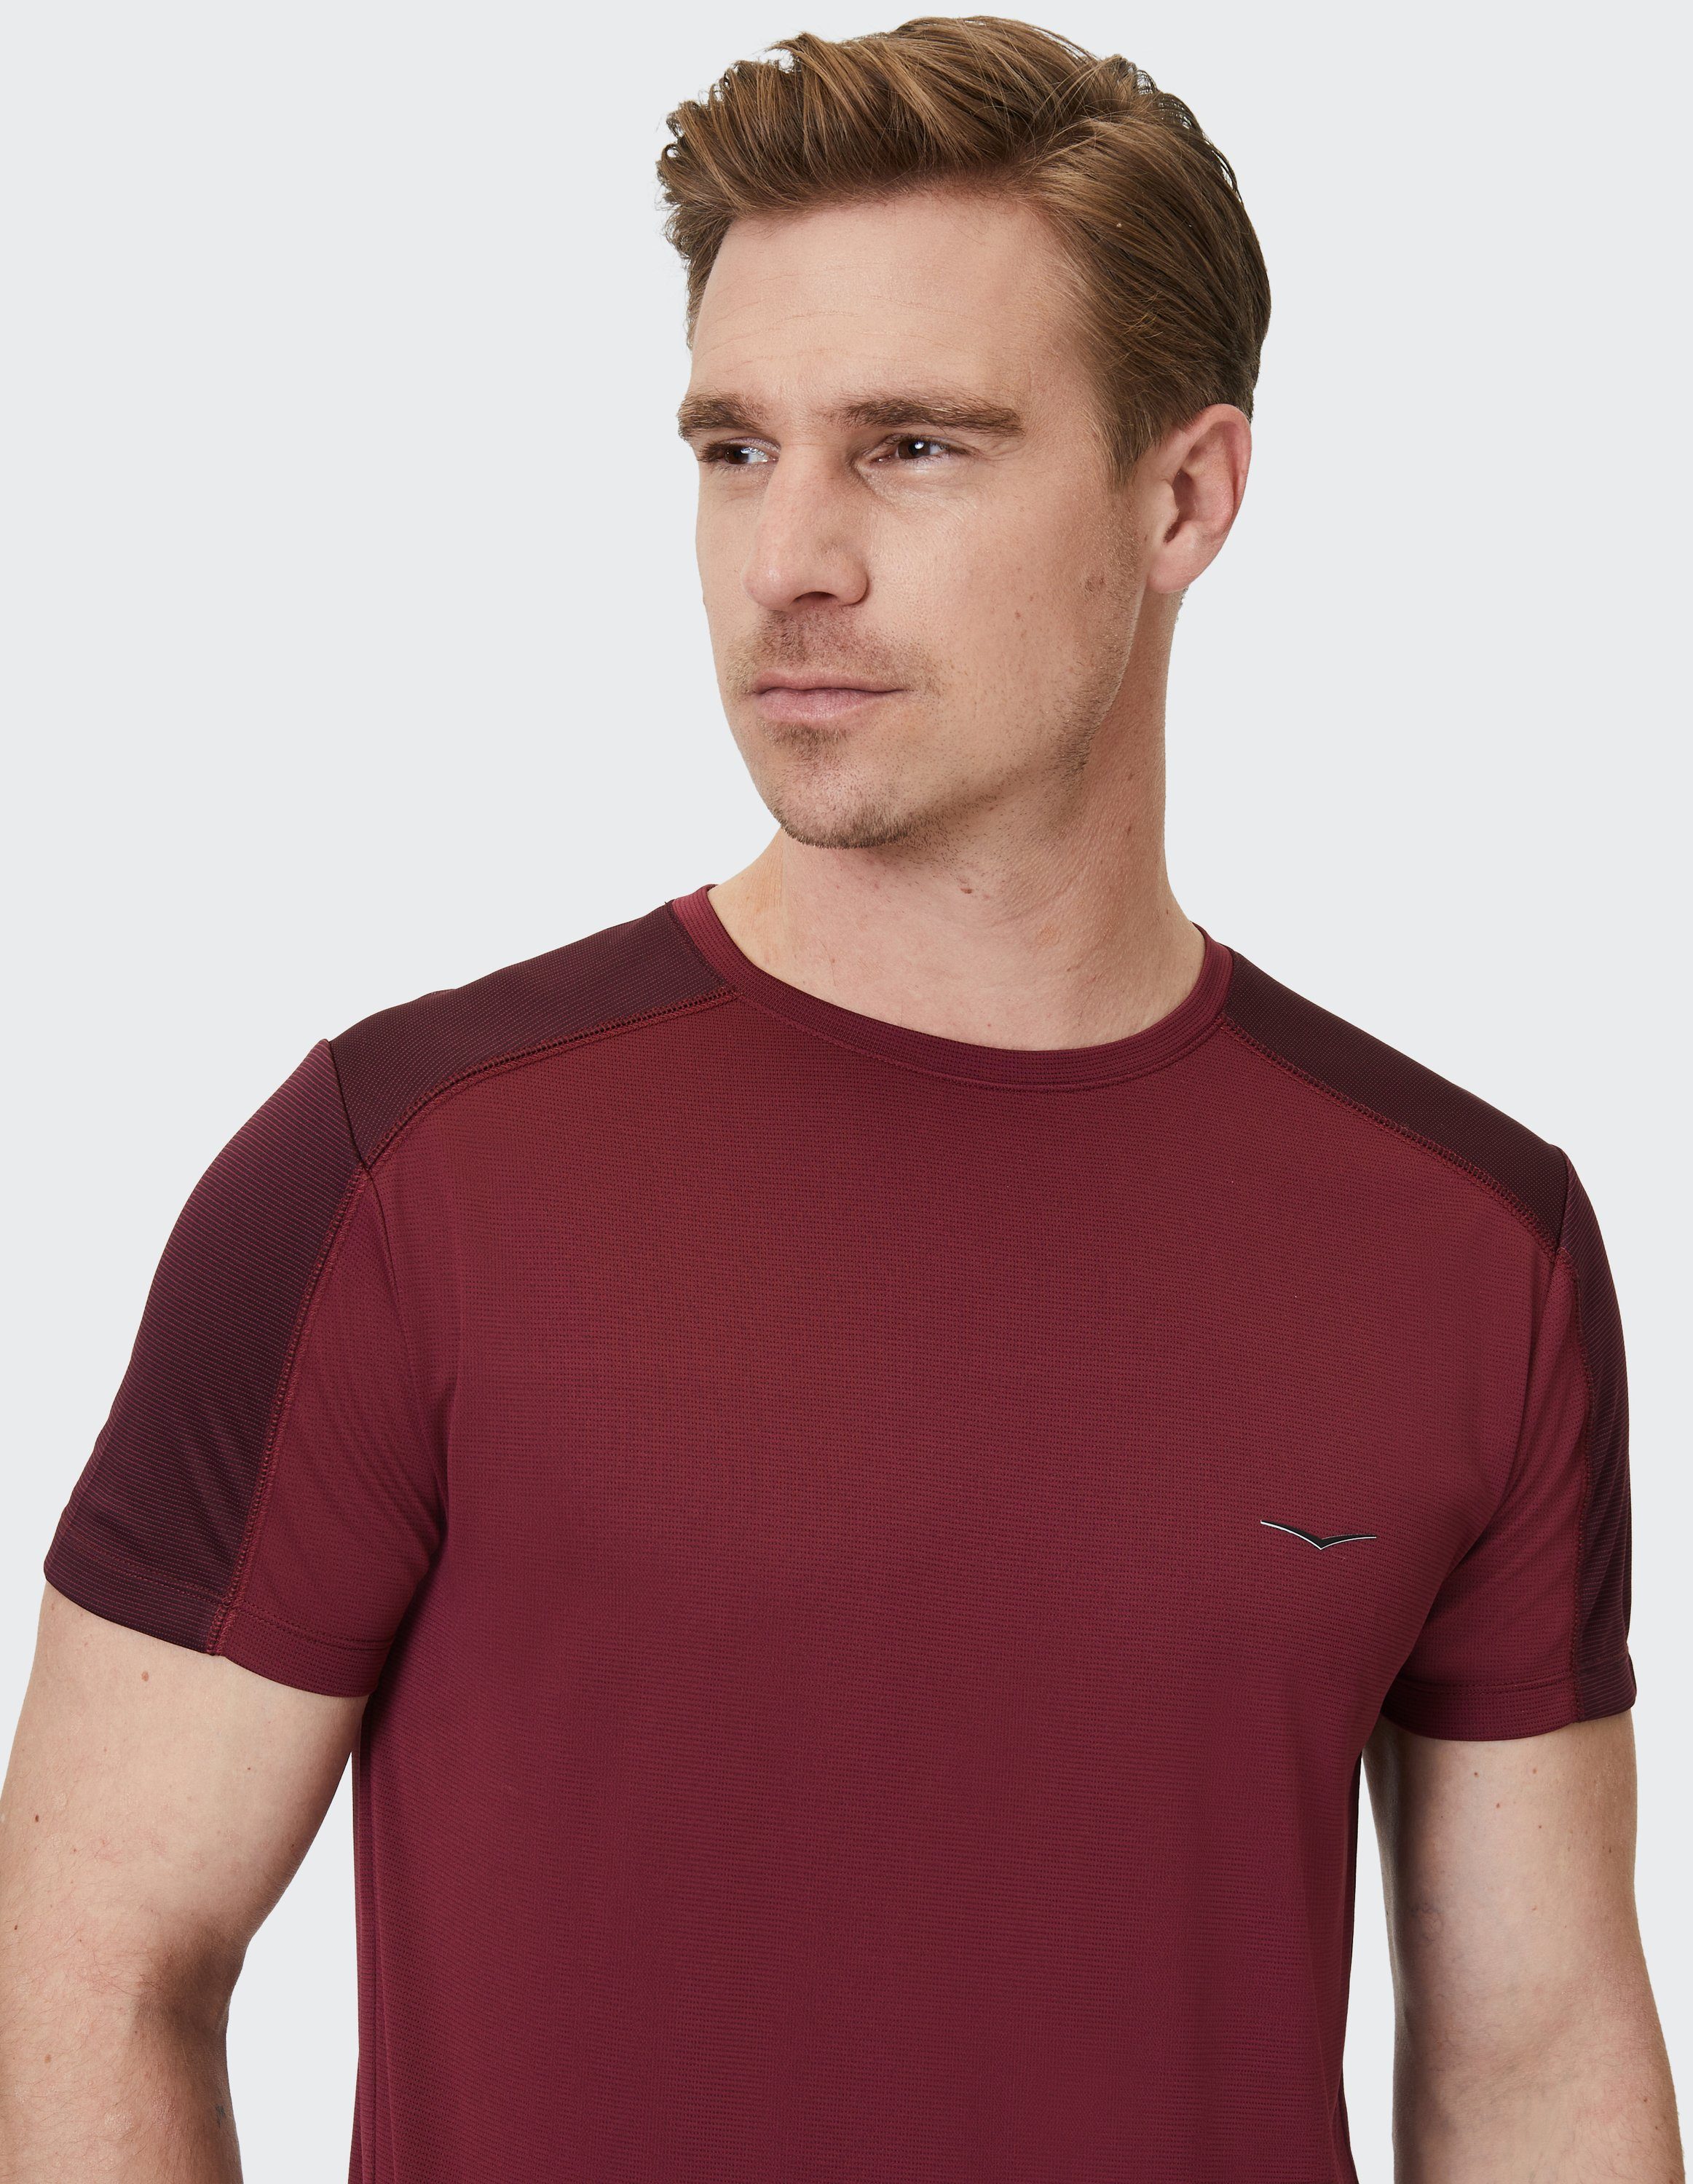 Ian T-Shirt Beach Venice burgundy VBM T-Shirt